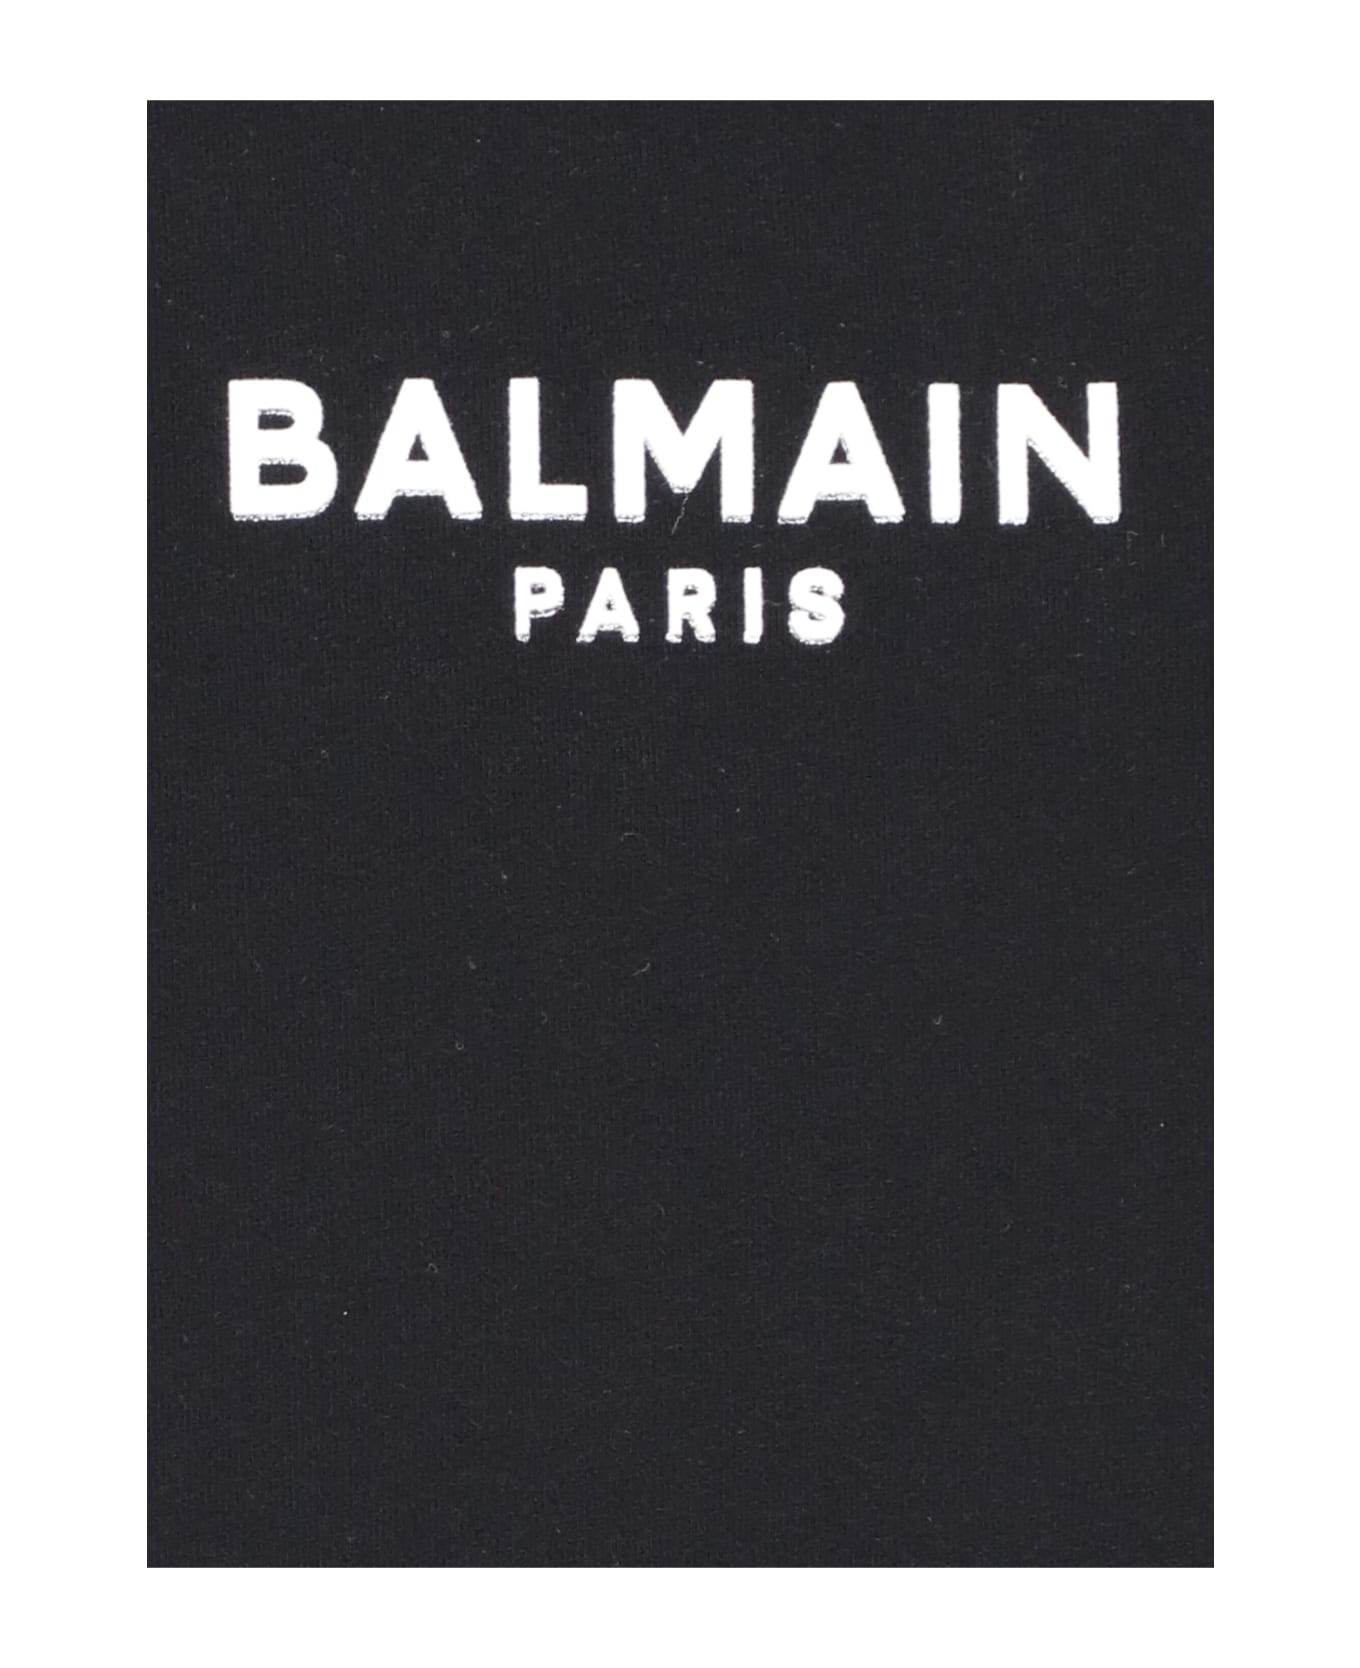 Balmain Cropped T-shirt With Logo - Black/white